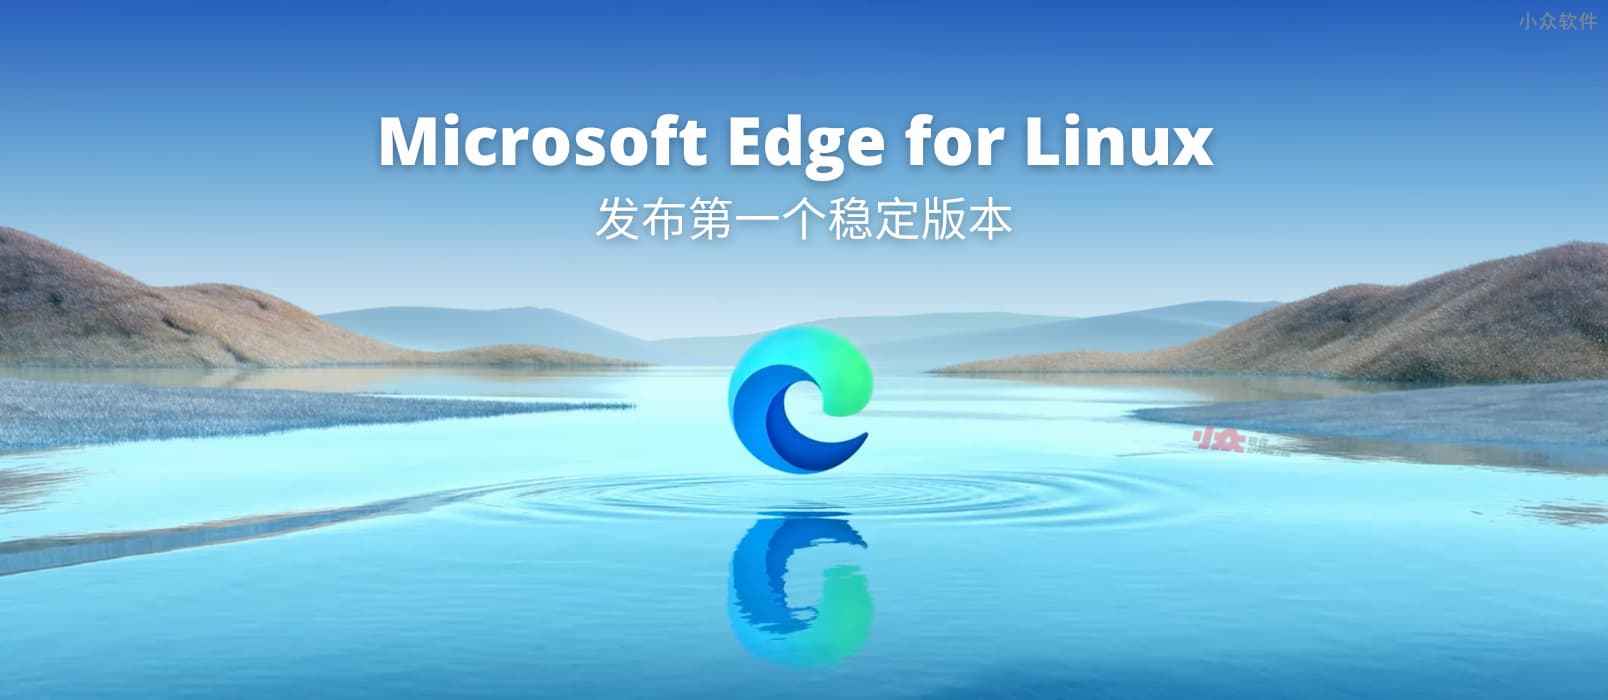 Microsoft Edge for Linux 发布第一个稳定版本